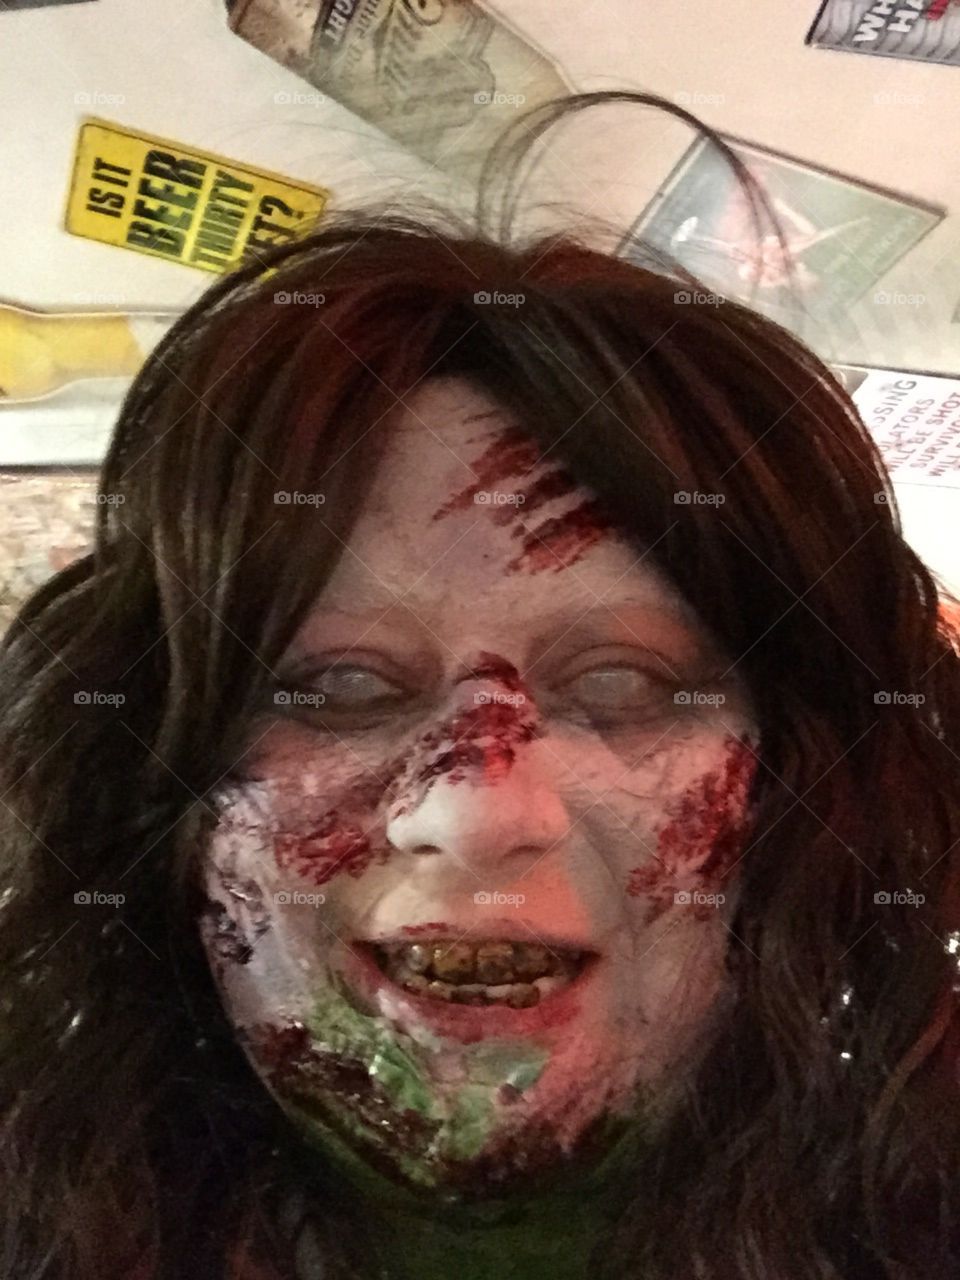 Regan Exorcist Halloween Costume 